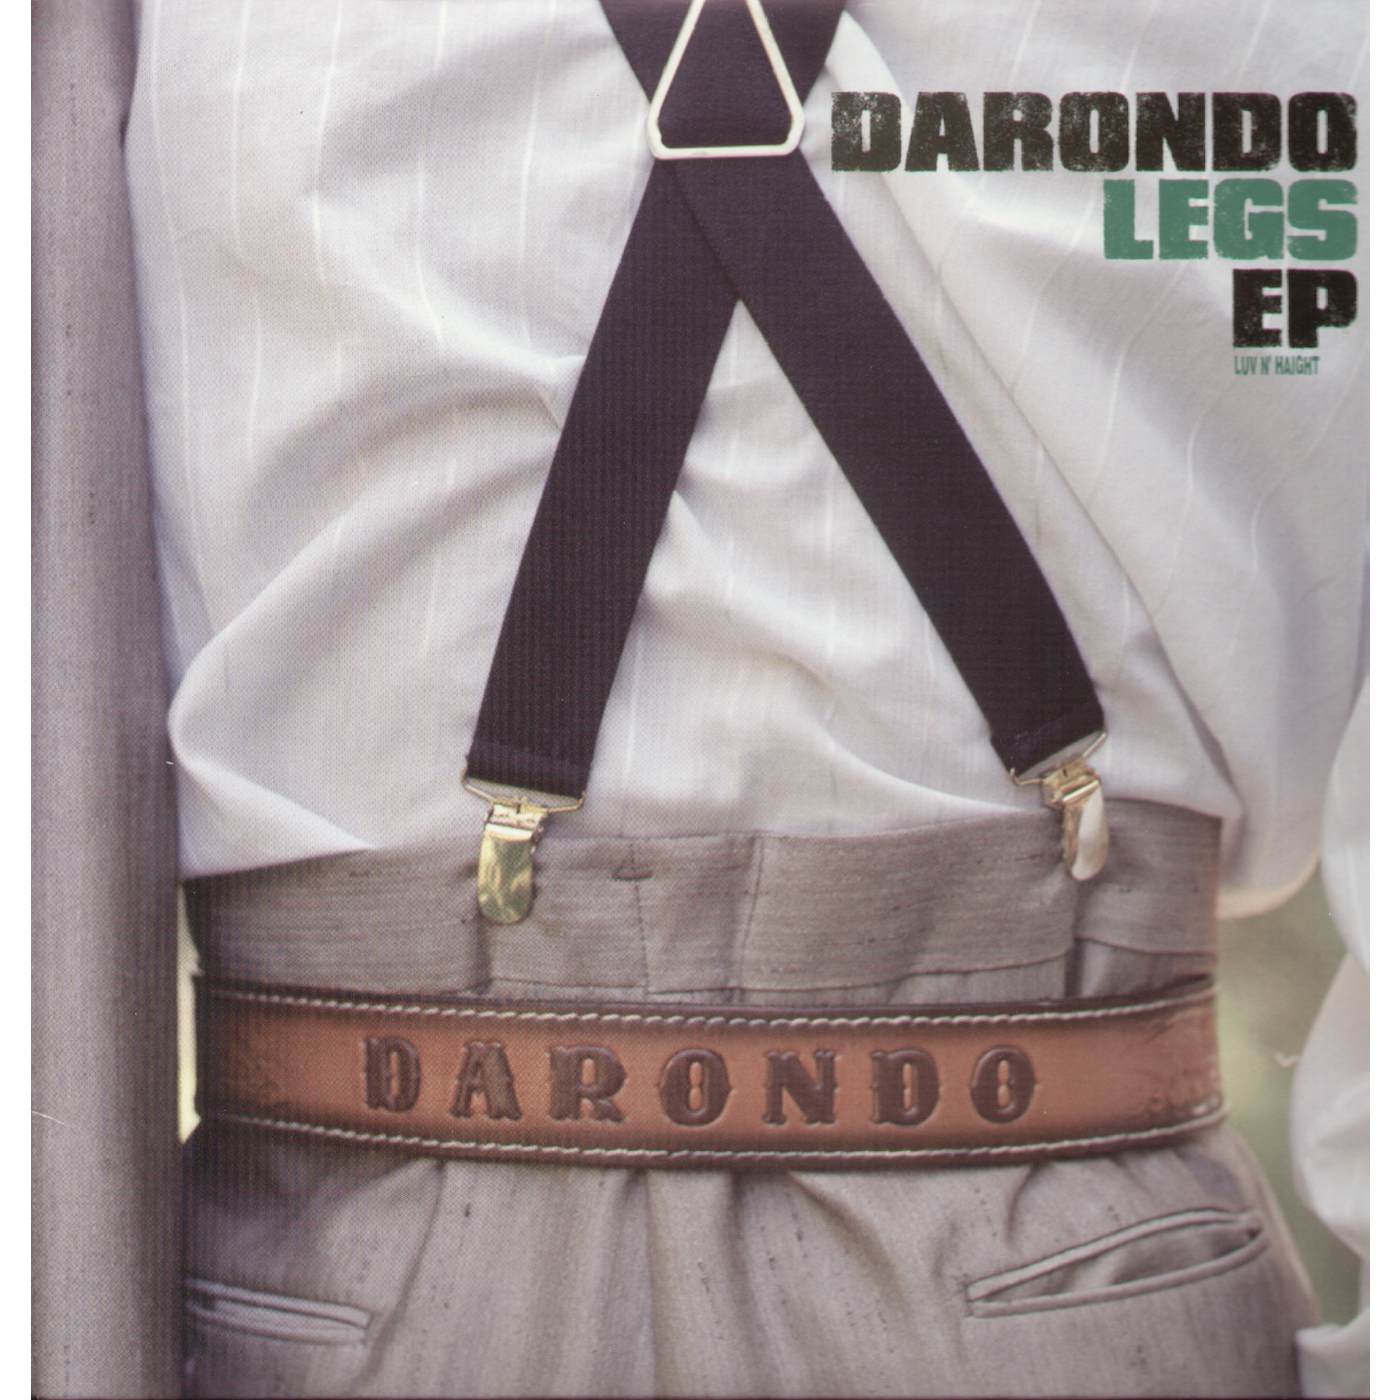 Darondo Legs Vinyl Record